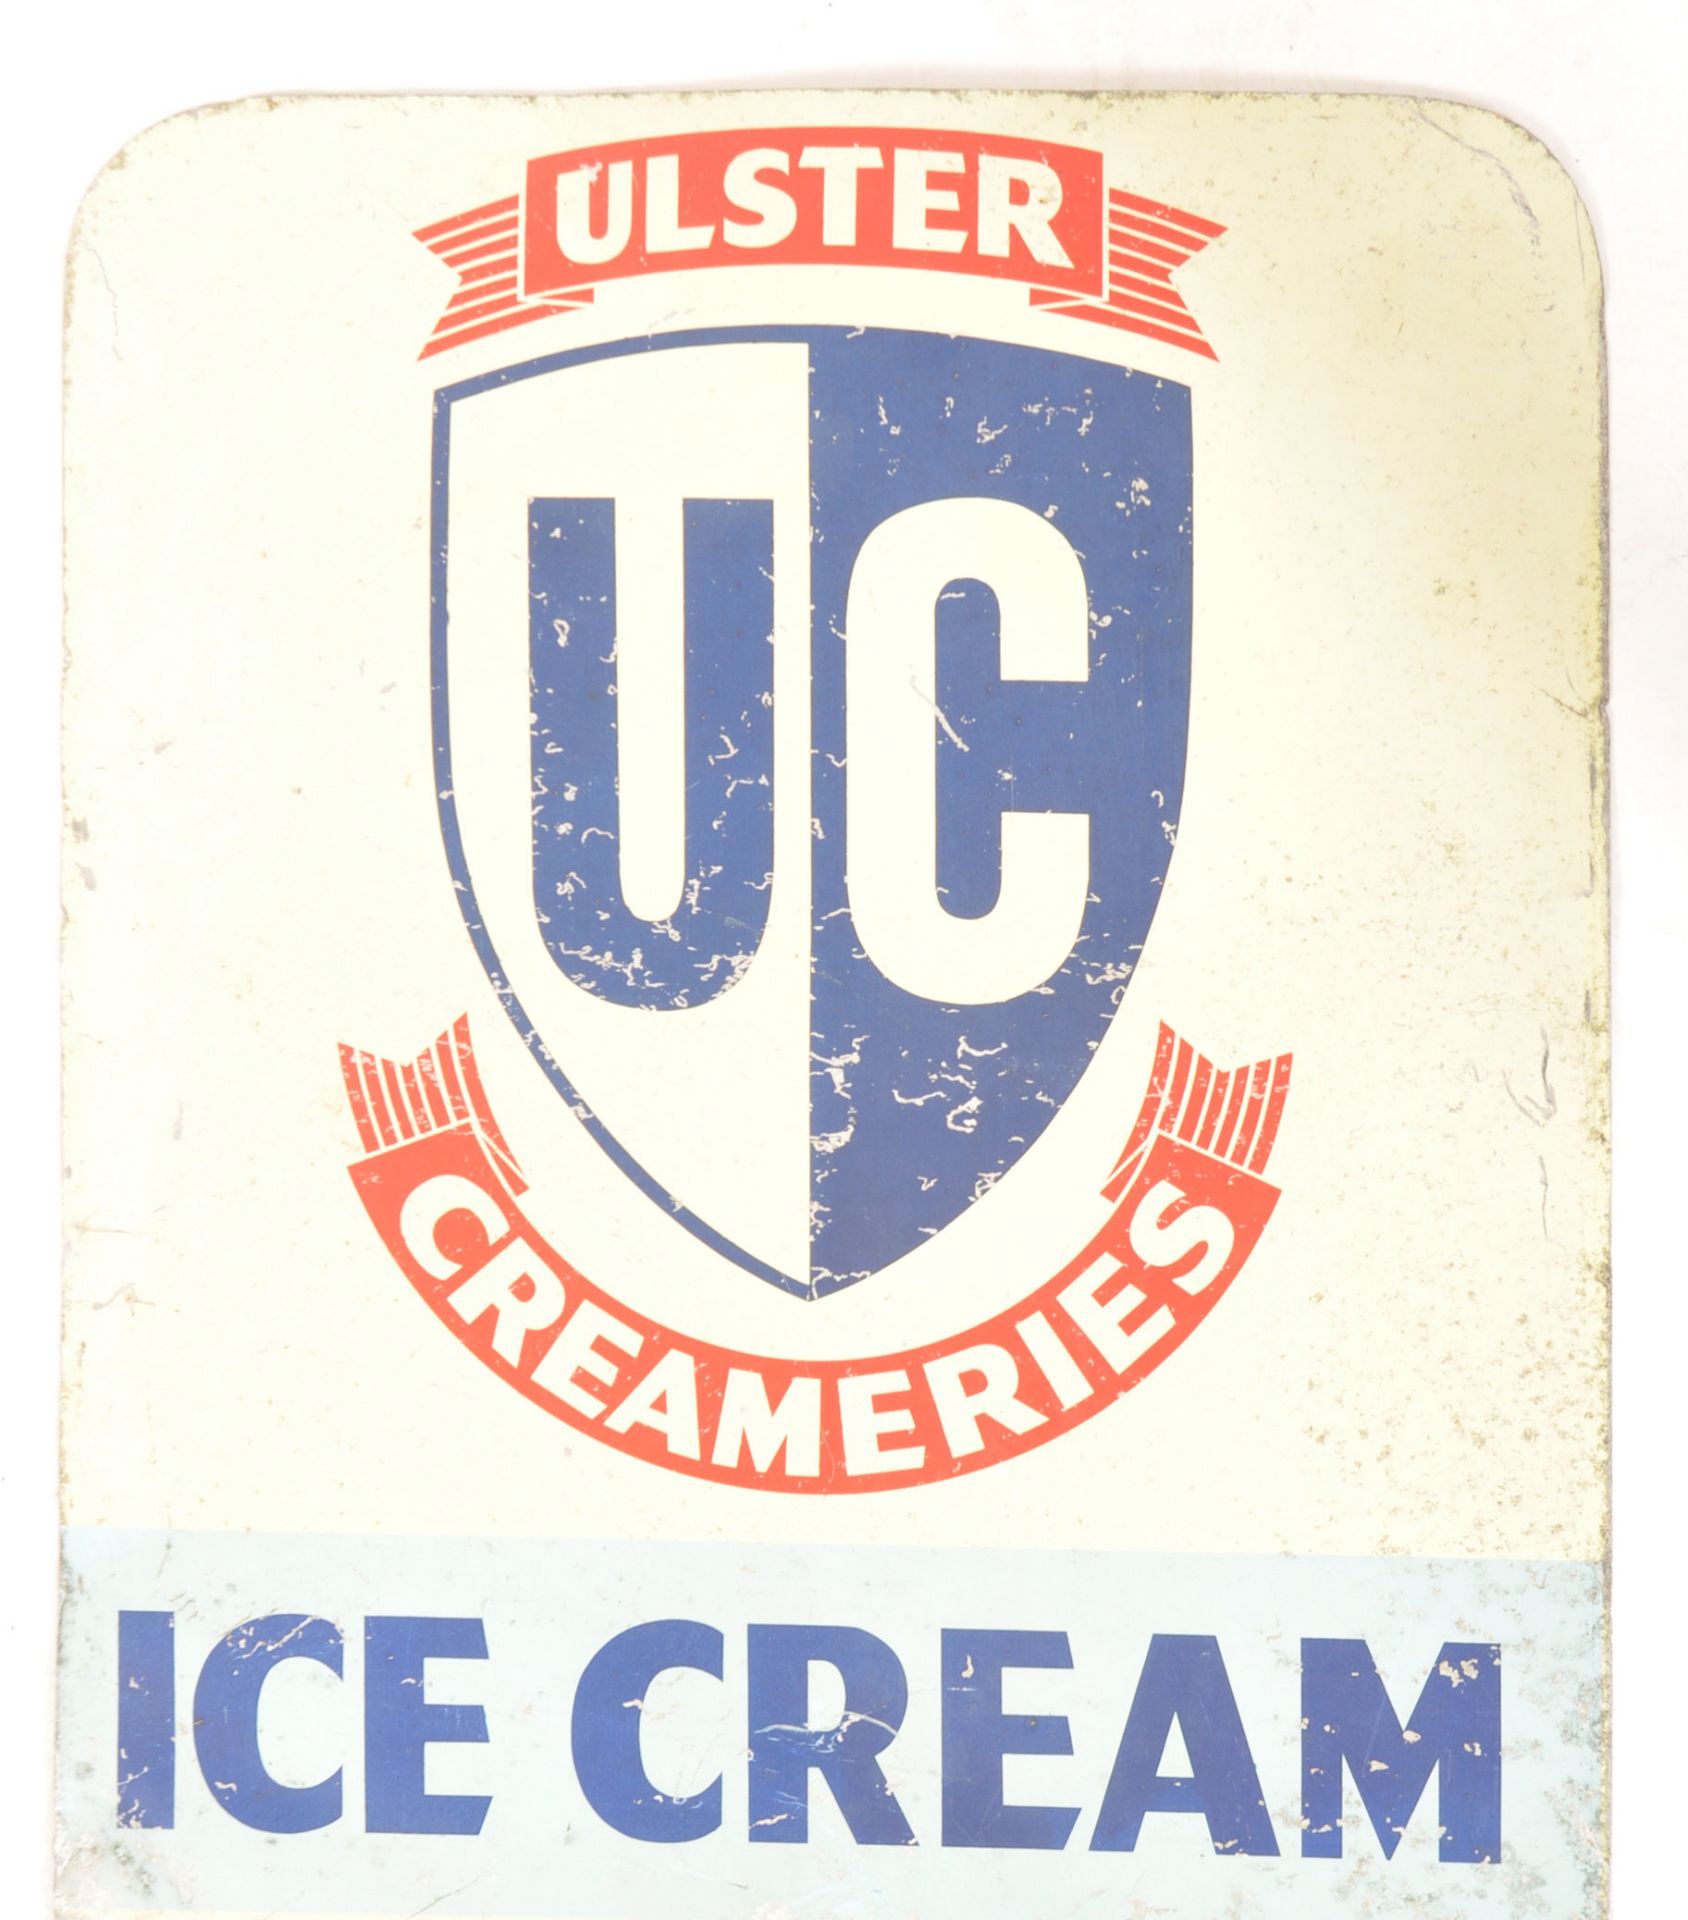 ULSTER CREAMERIES ICE CREAMS - RETRO ADVERTISING SHOP SIGN - Image 4 of 4